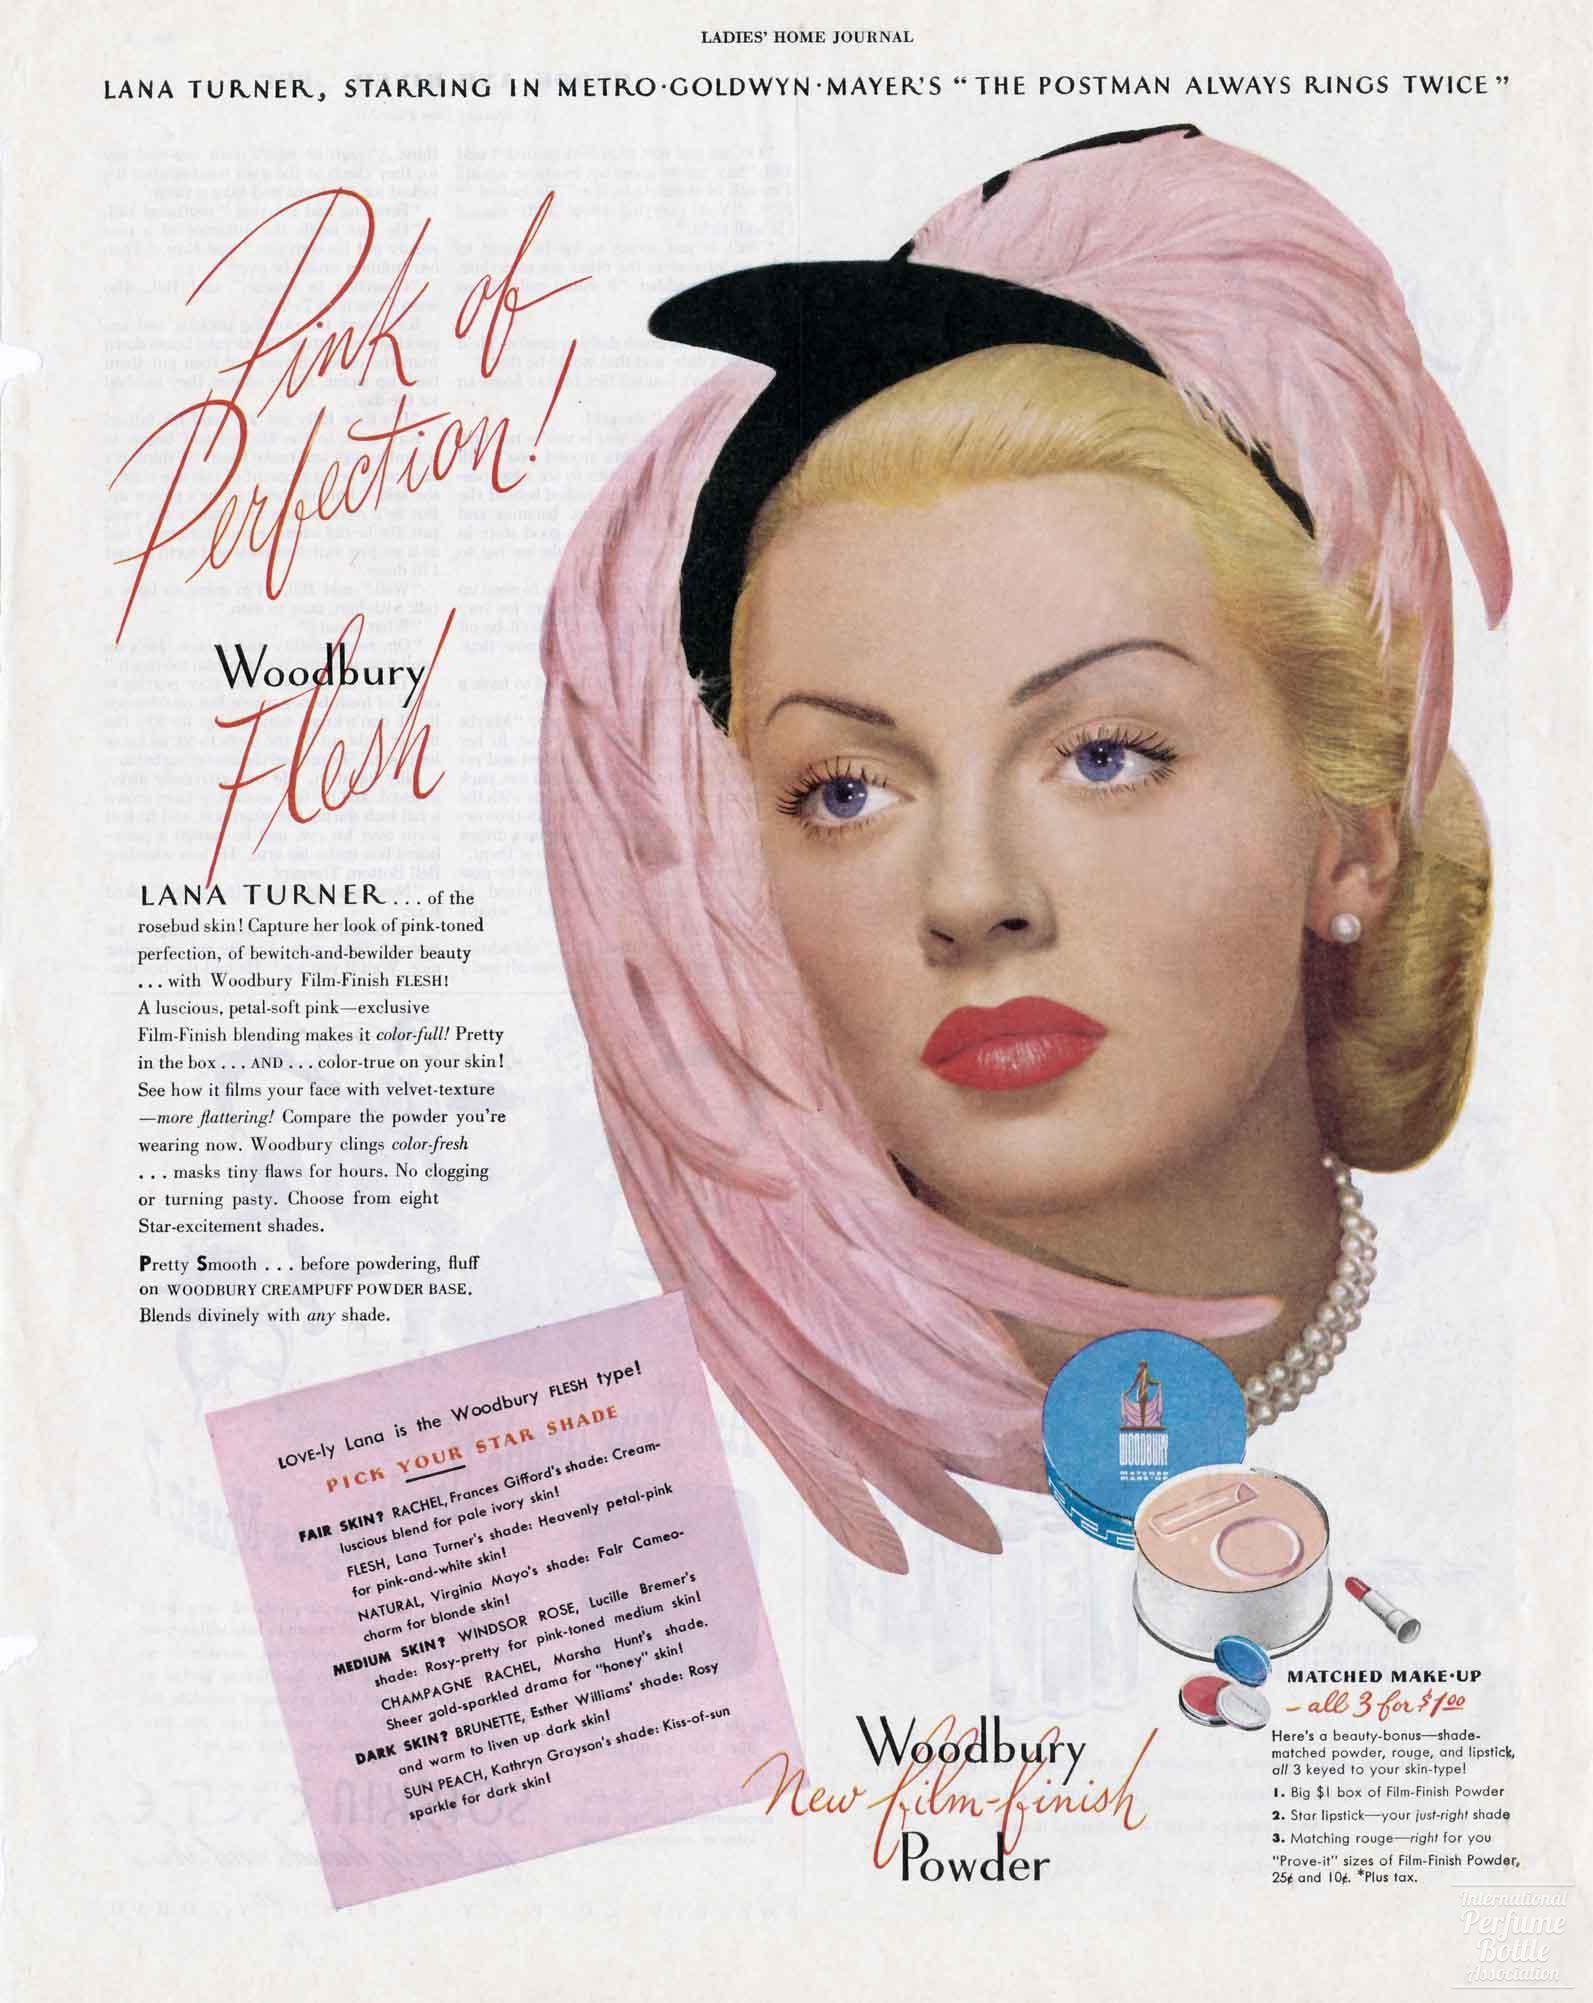 "Film Finish" Powder by Woodbury Advertisement - 1946